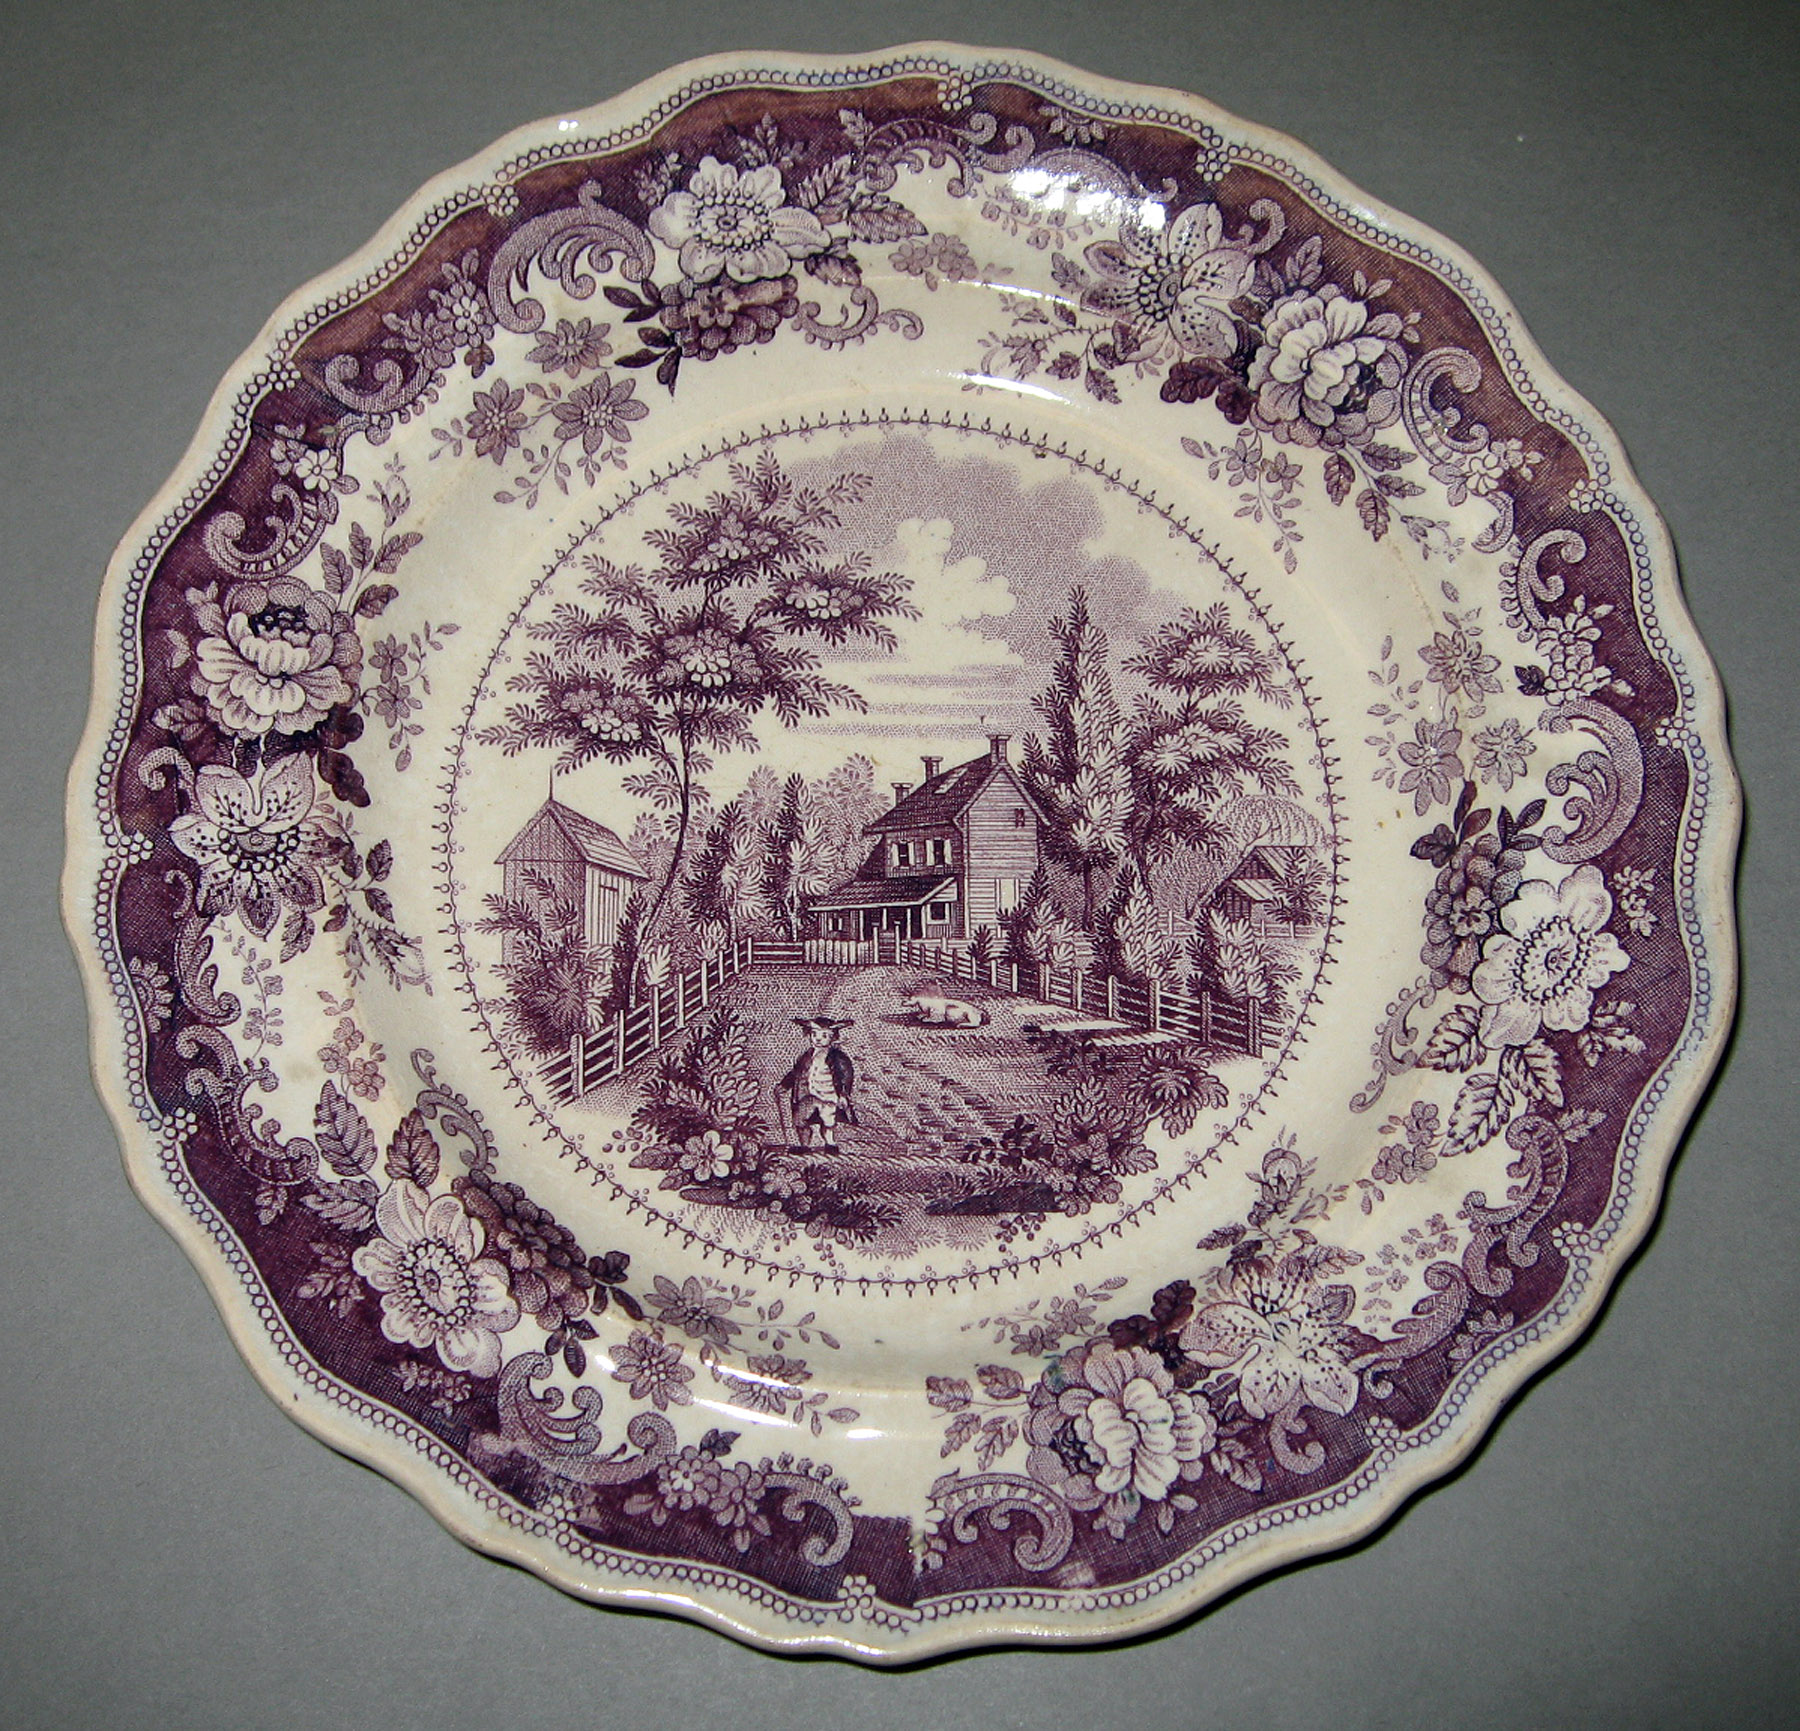 1966.0822.007 Earthenware plate